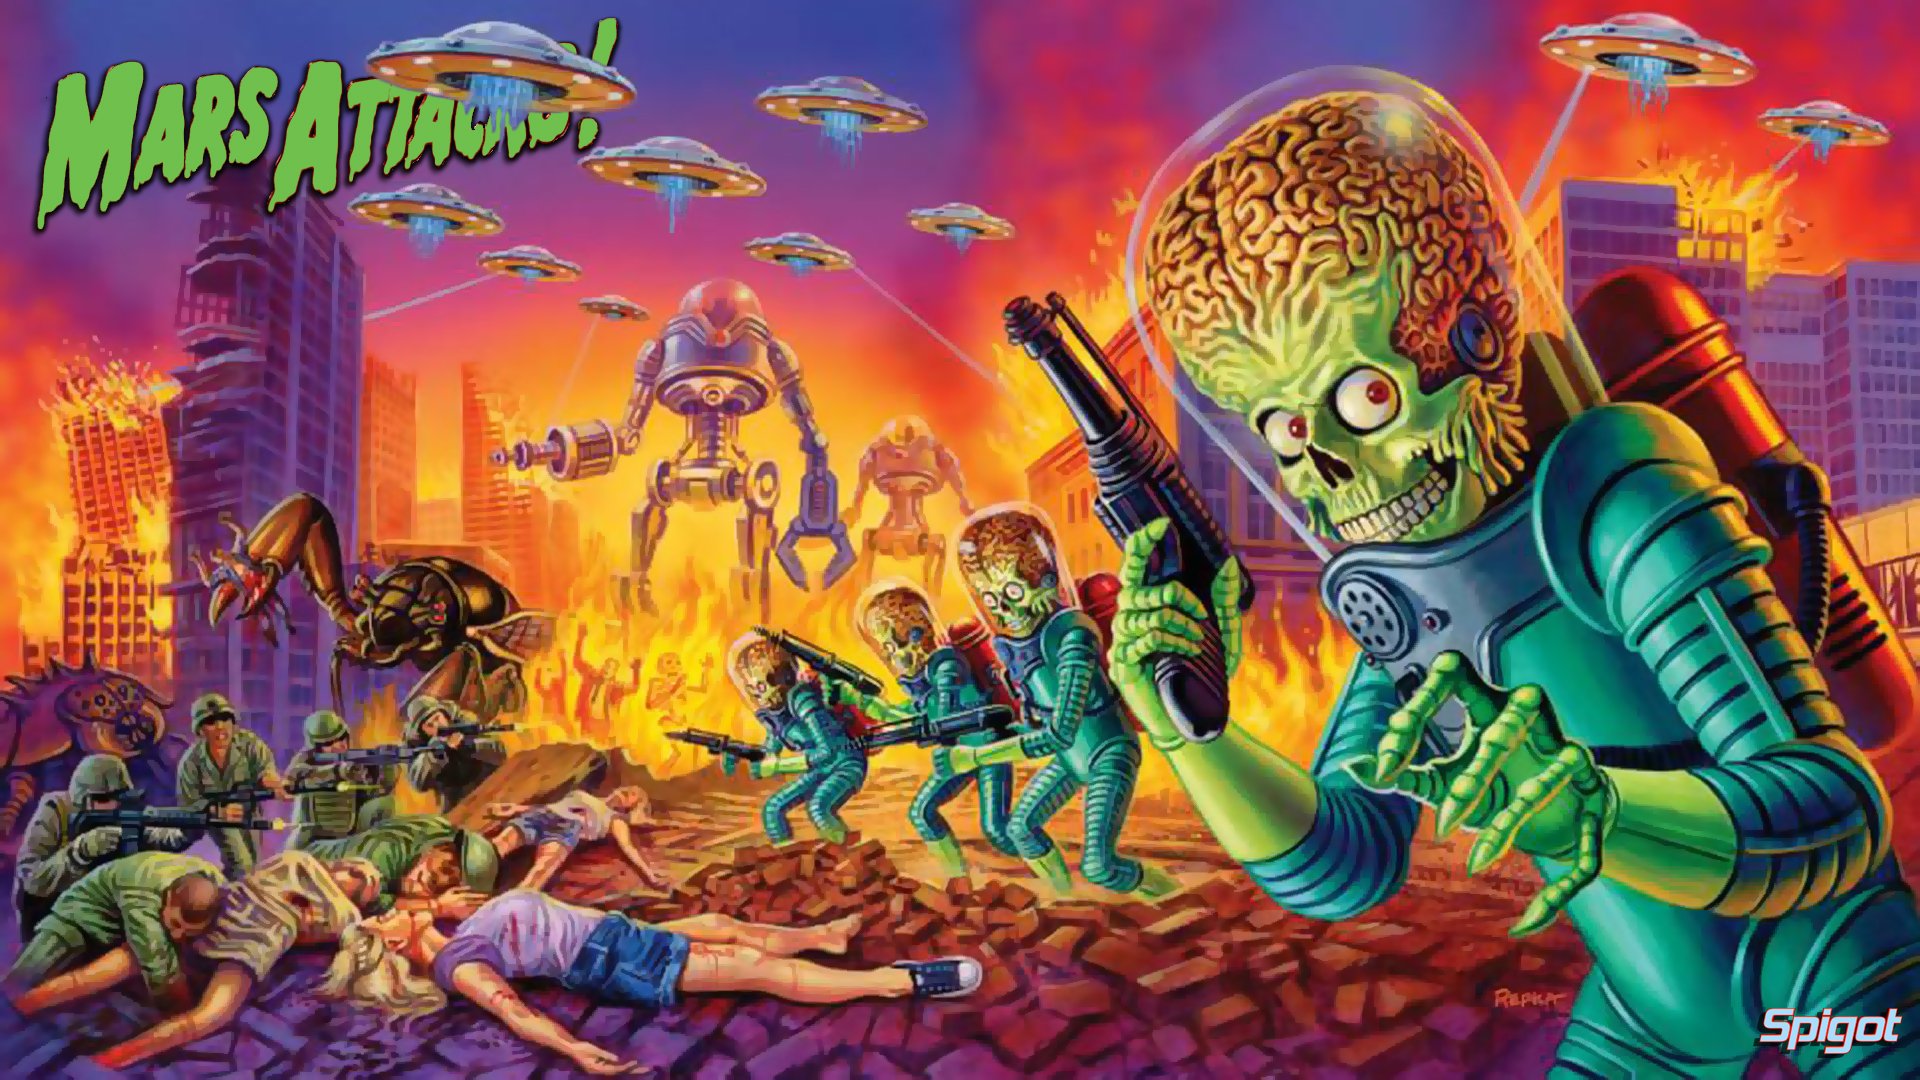 mars, Attacks, Comedy, Sci fi, Martian, Alien, Aliens, Action, 1mat, Apocalyptic, Comics, Movie, Poster Wallpaper